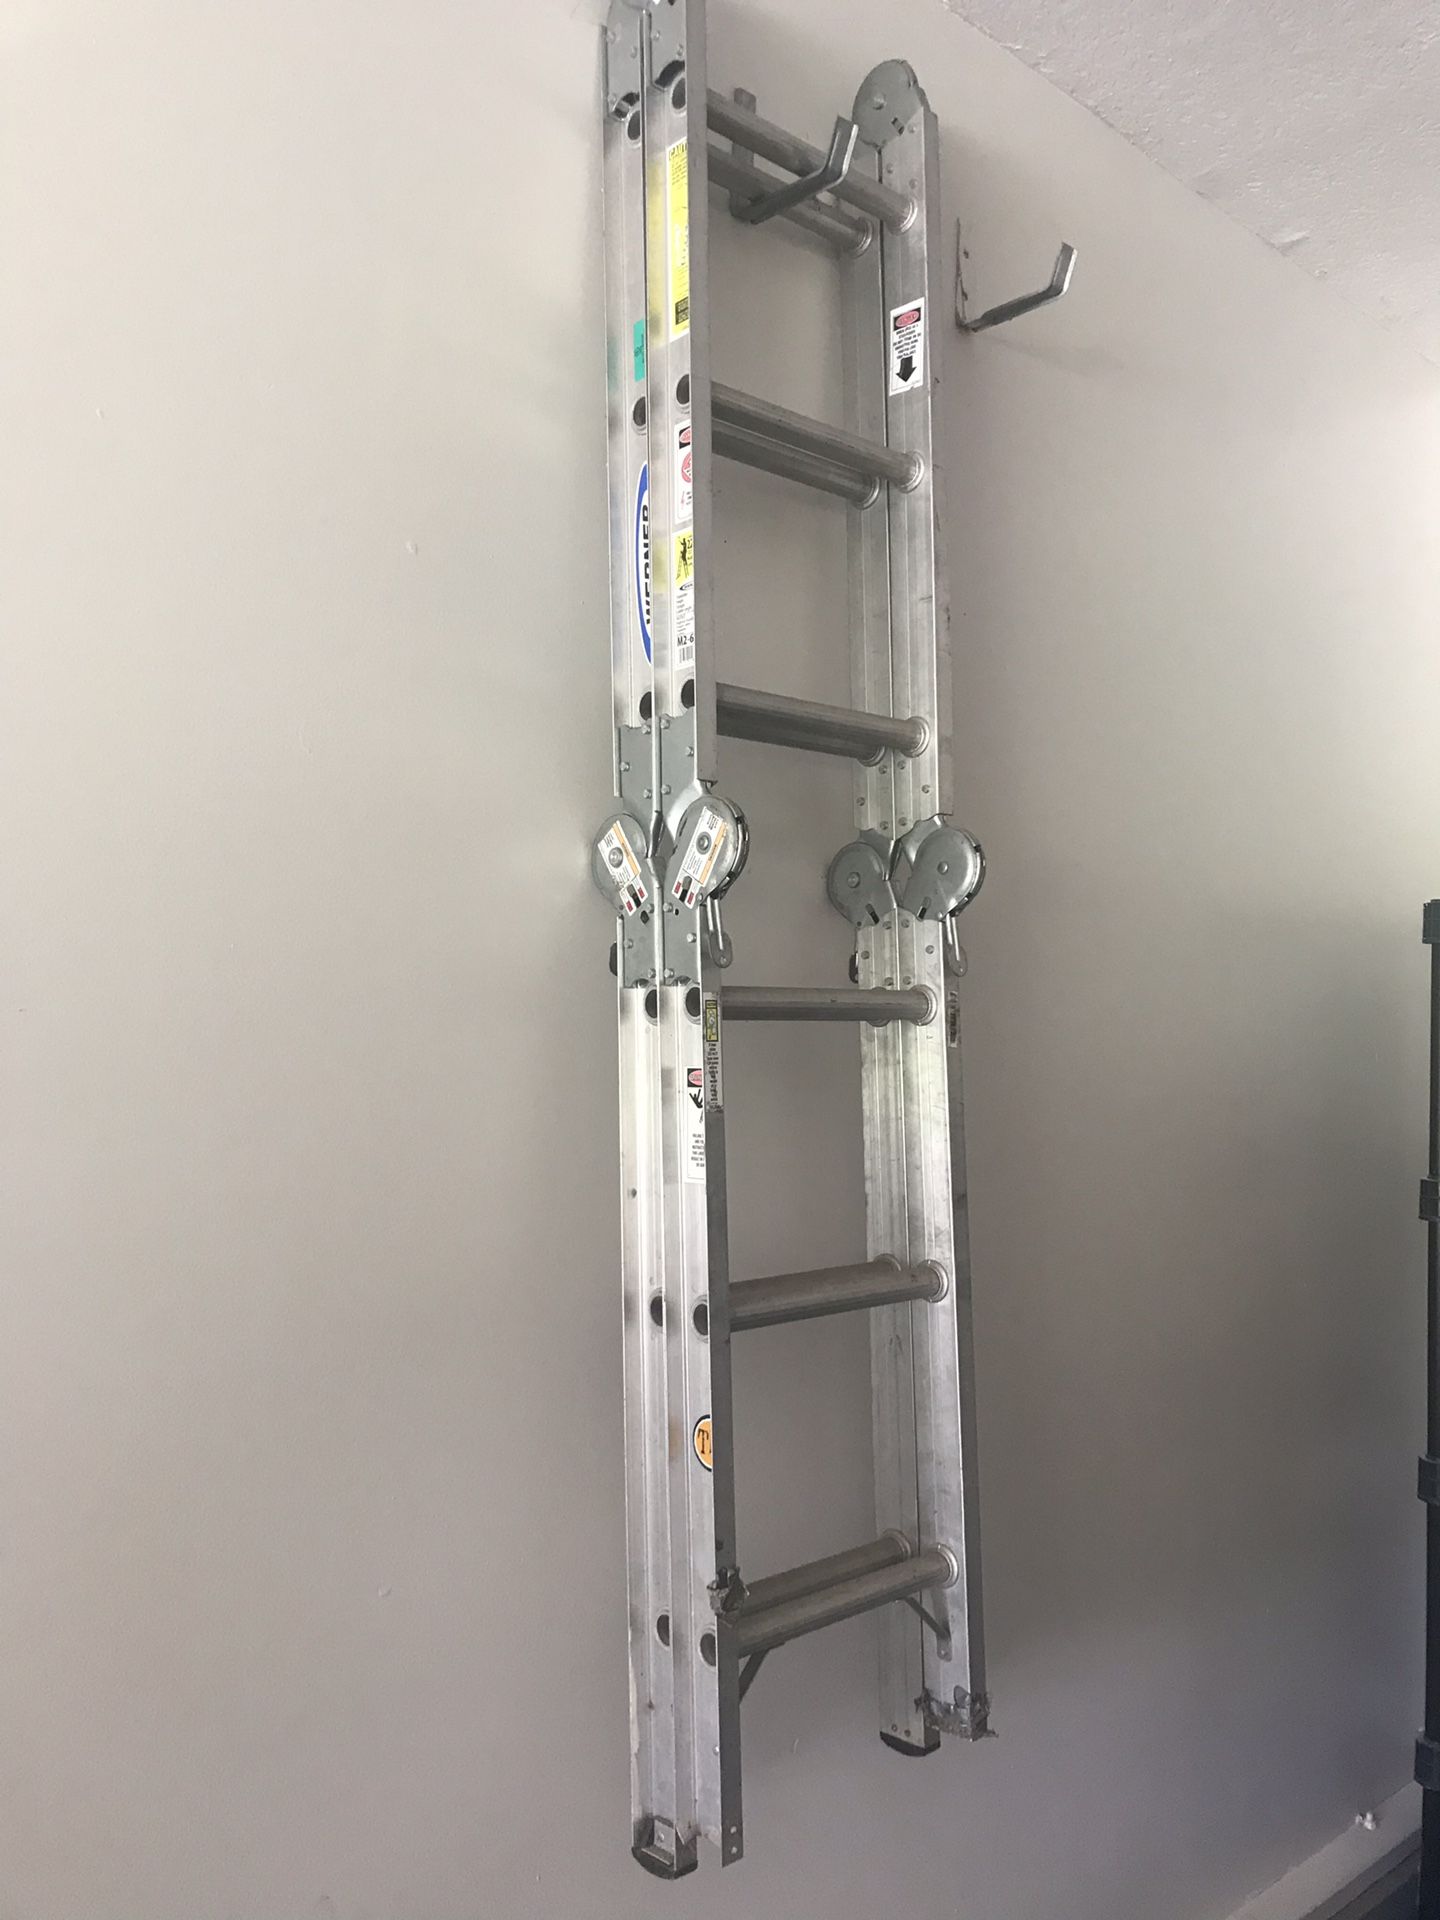 6 foot commercial grade multi position ladder